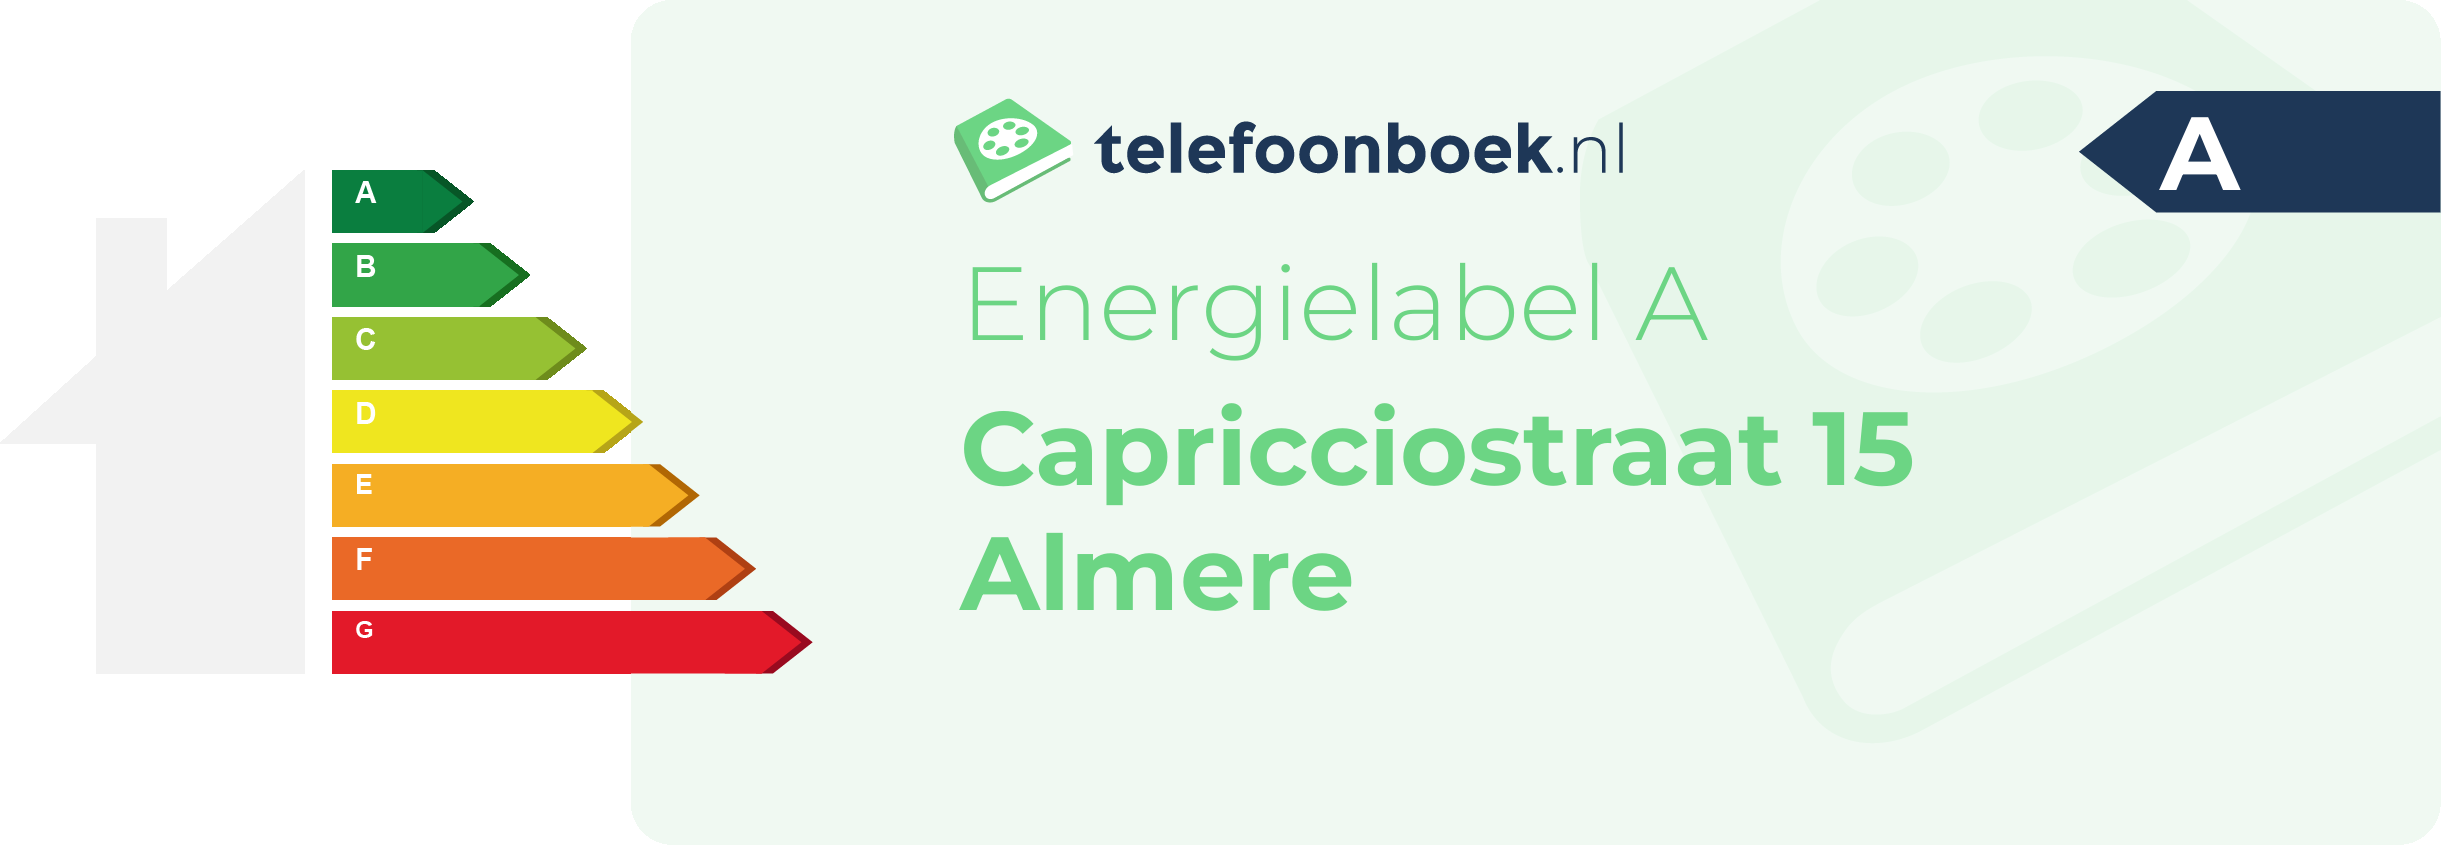 Energielabel Capricciostraat 15 Almere